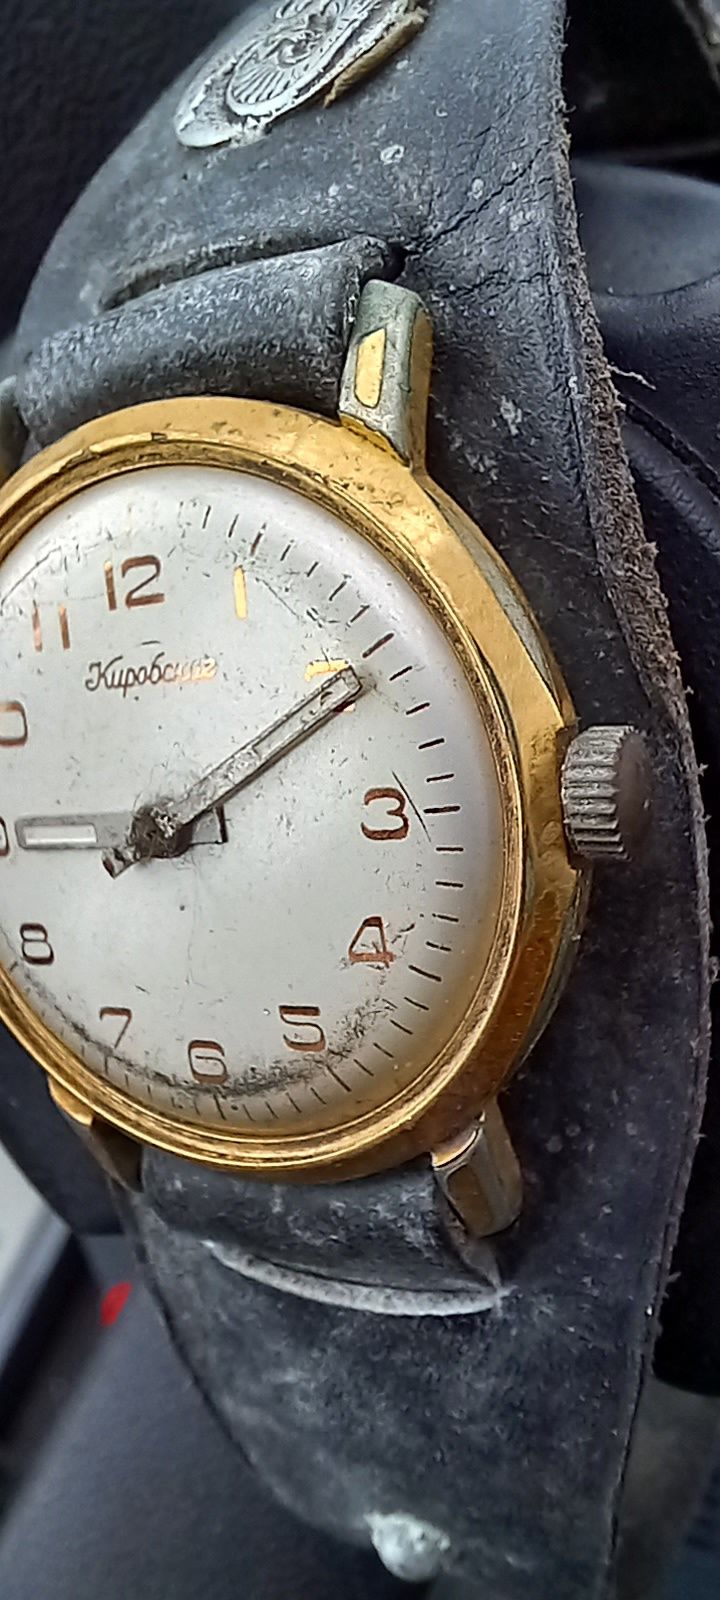 Stary zegarek kirowski